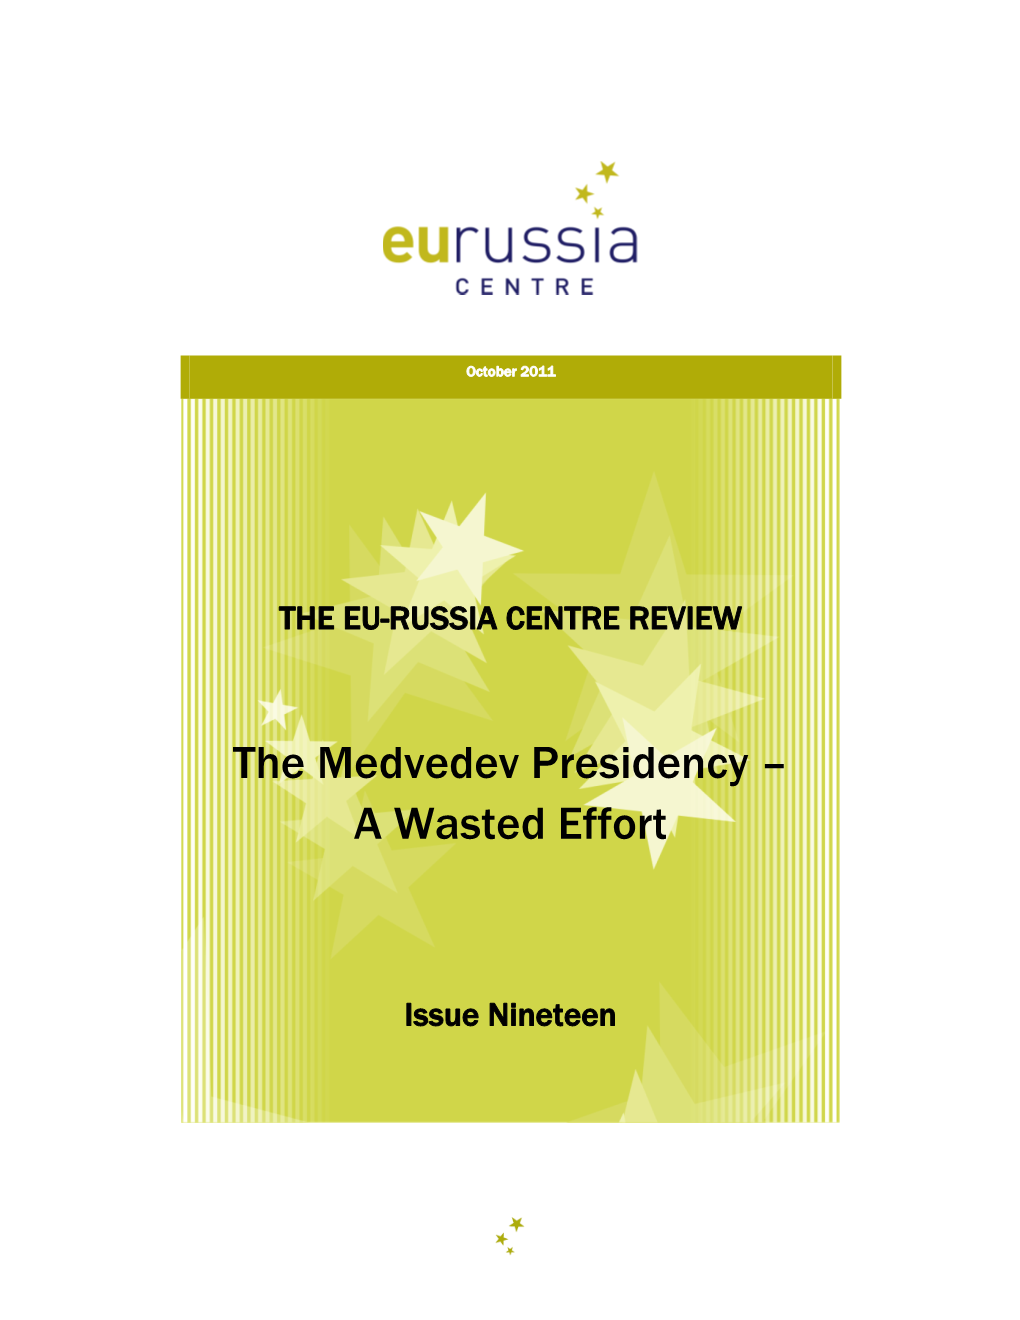 The Medvedev Presidency – a Wasted Effort